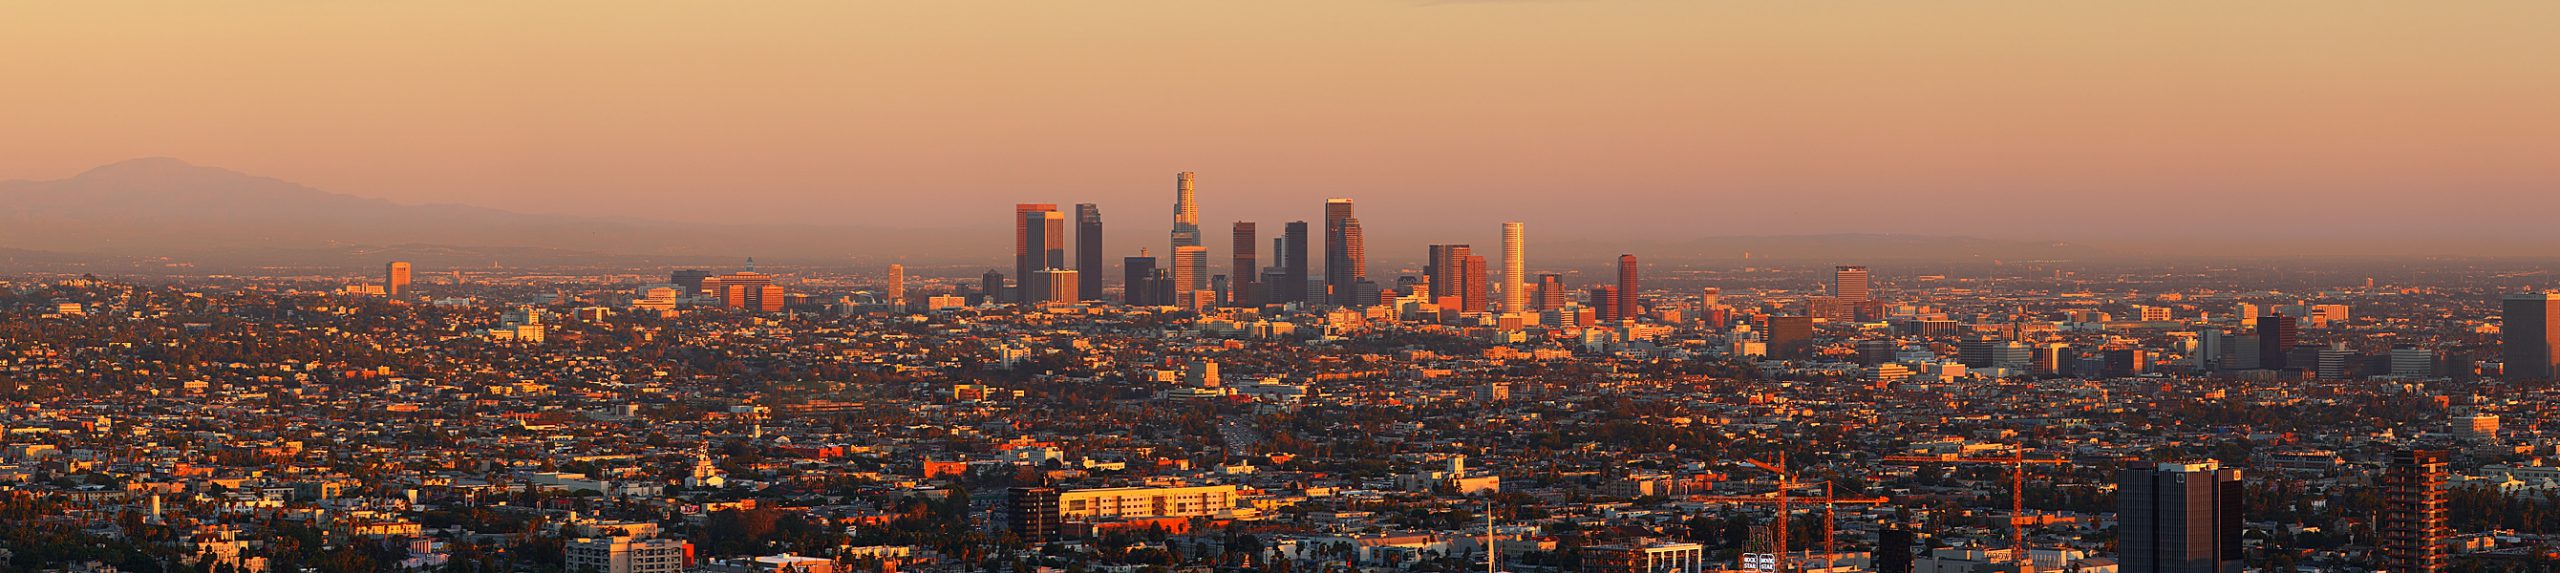 Los_Angeles_Panorama